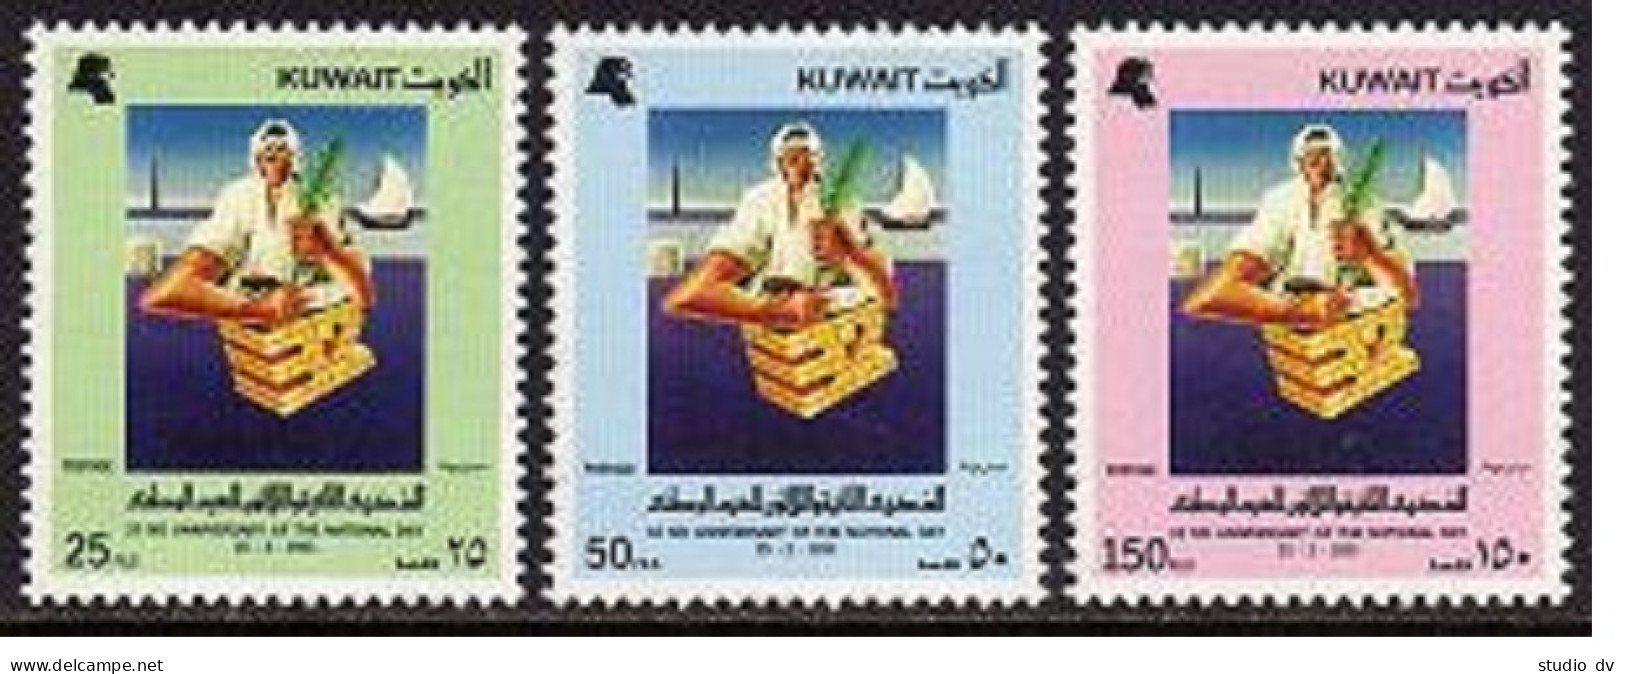 Kuwait 1208-1210, MNH. Michel 1305-1312 MH. 32th National Day, 1983. Ship. - Koweït